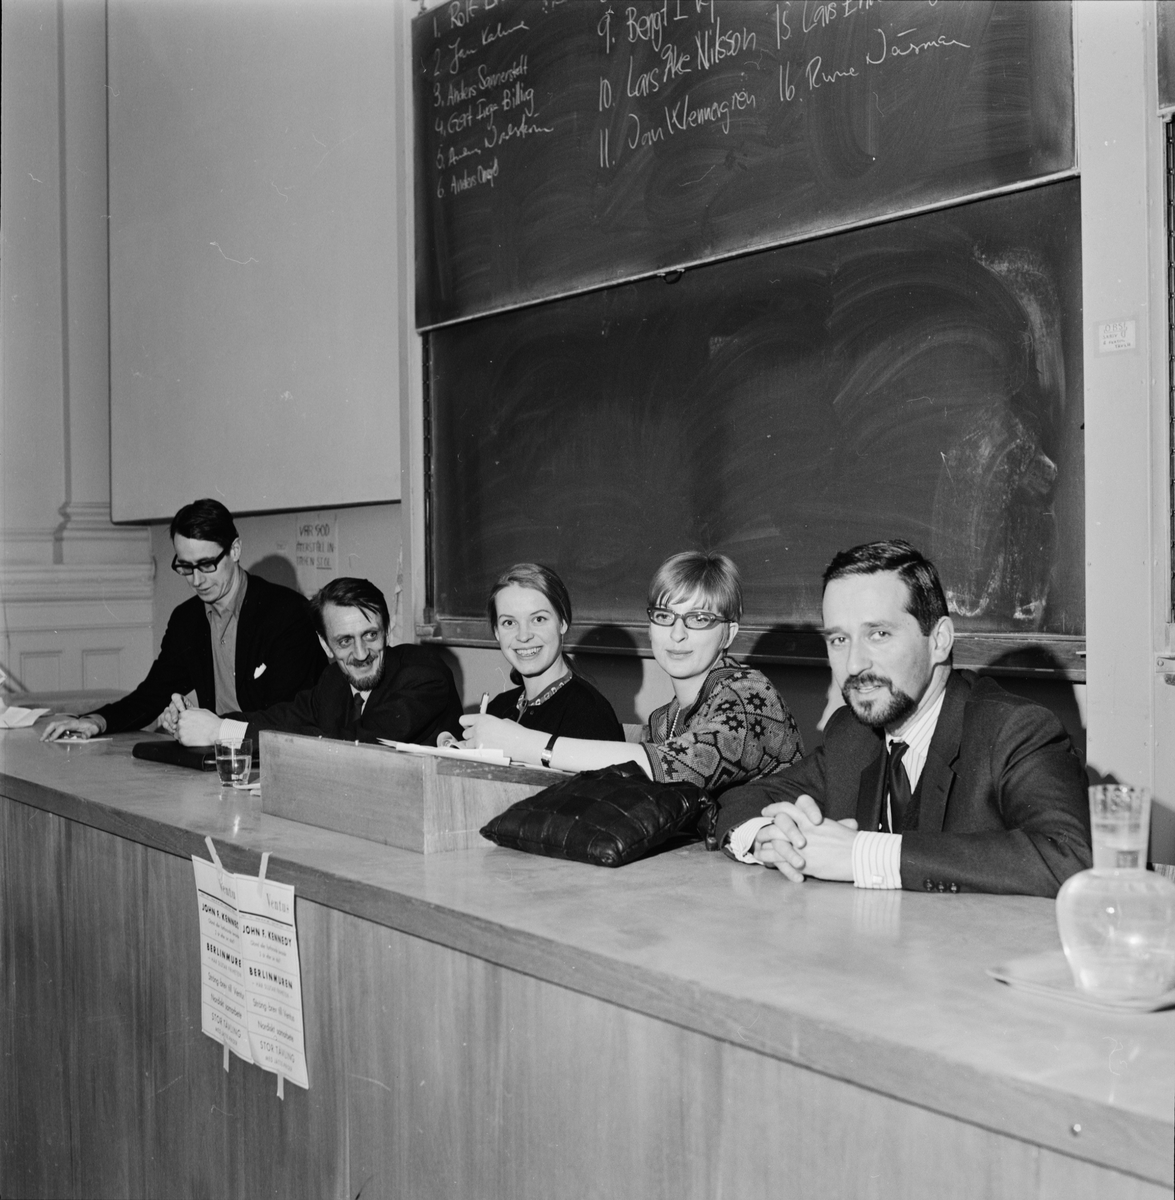 SSUH - "samtal om narkomani", Universitetet, Uppsala 1966